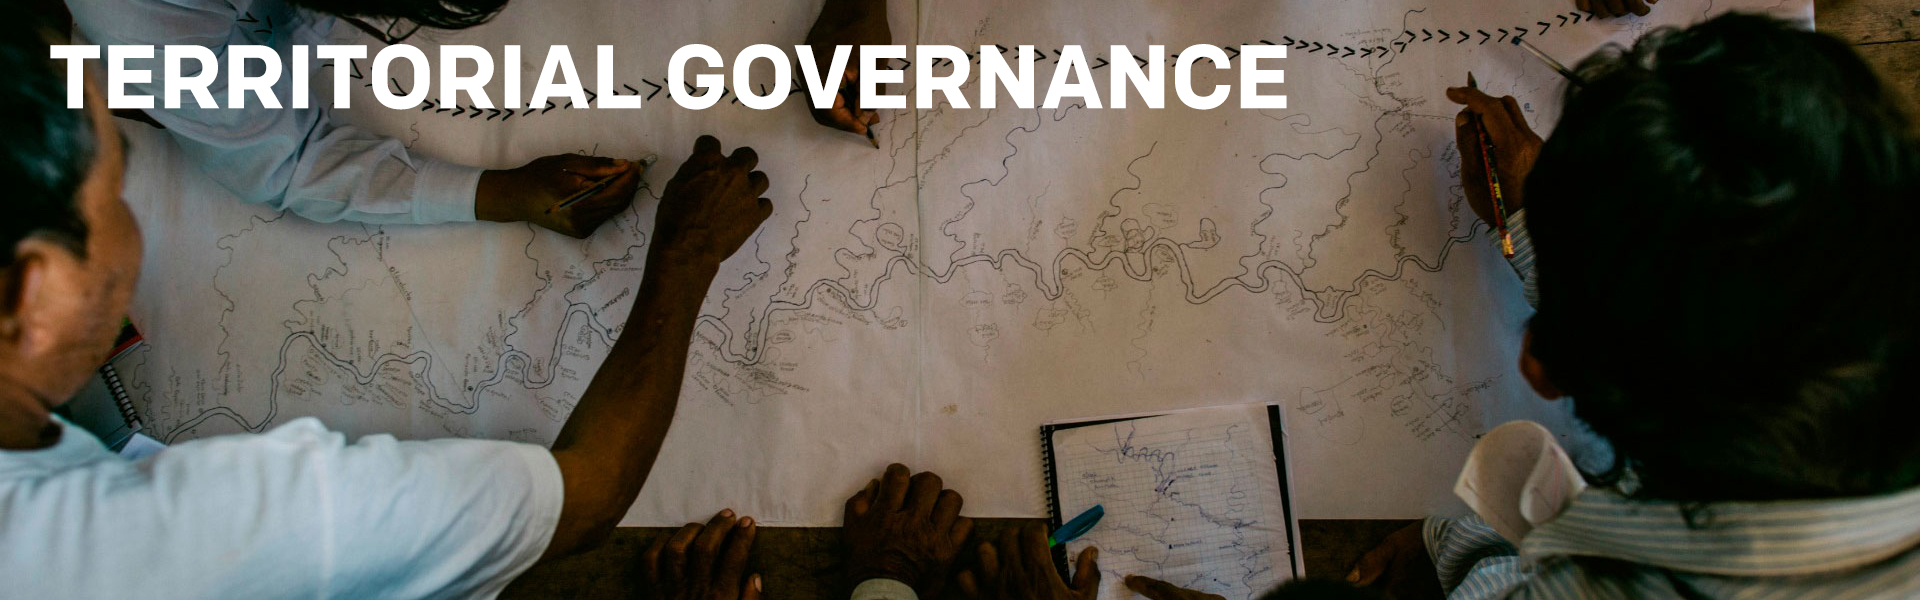 Territorial Governance